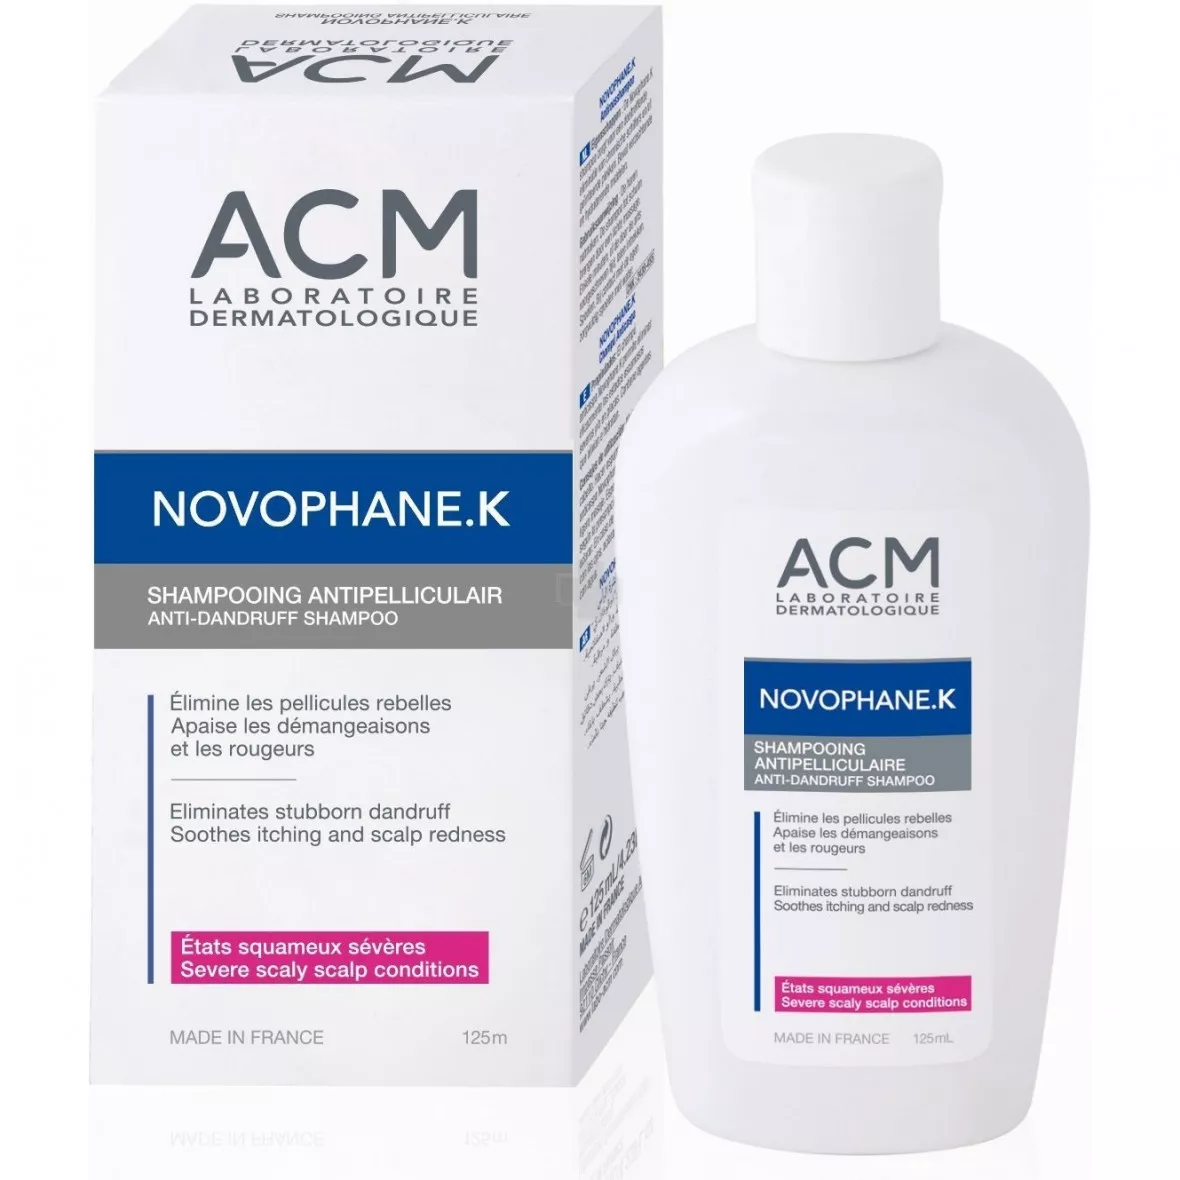 ACM Novophane K antimatreata cronica 125ml, [],remediumfarm.ro